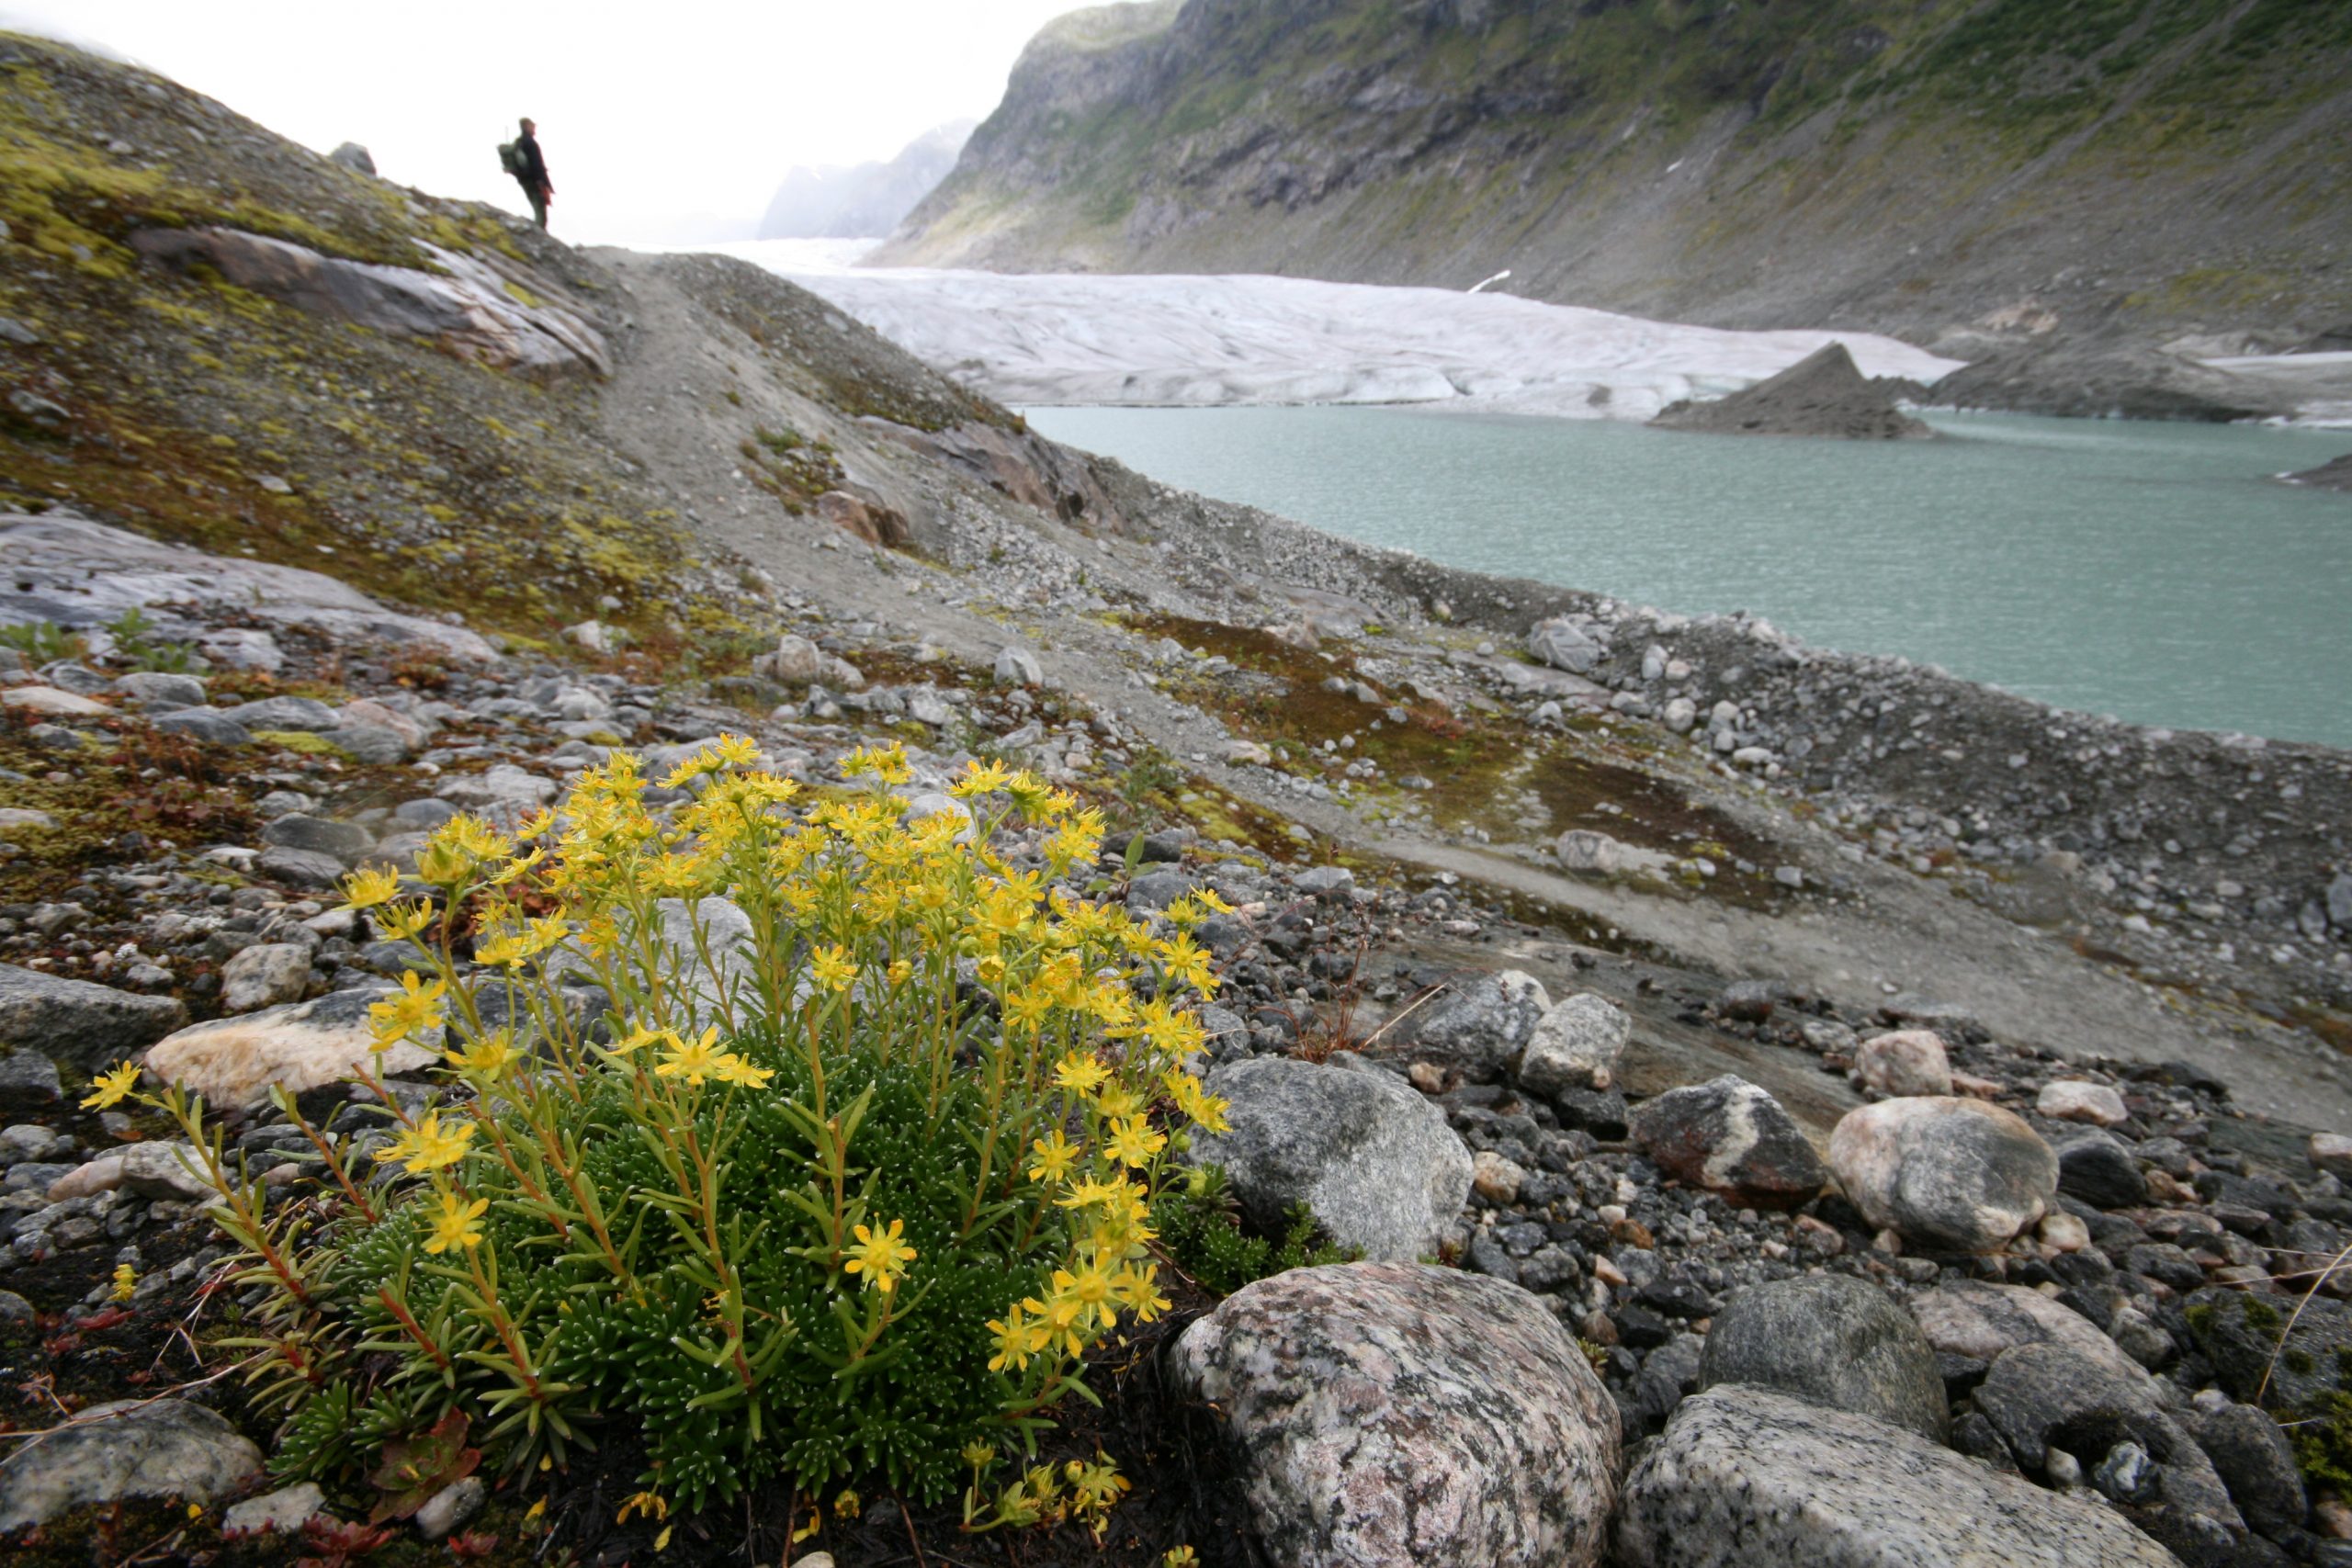 Yellow saxifrage plant growing in rocky terrain near a glacier lake